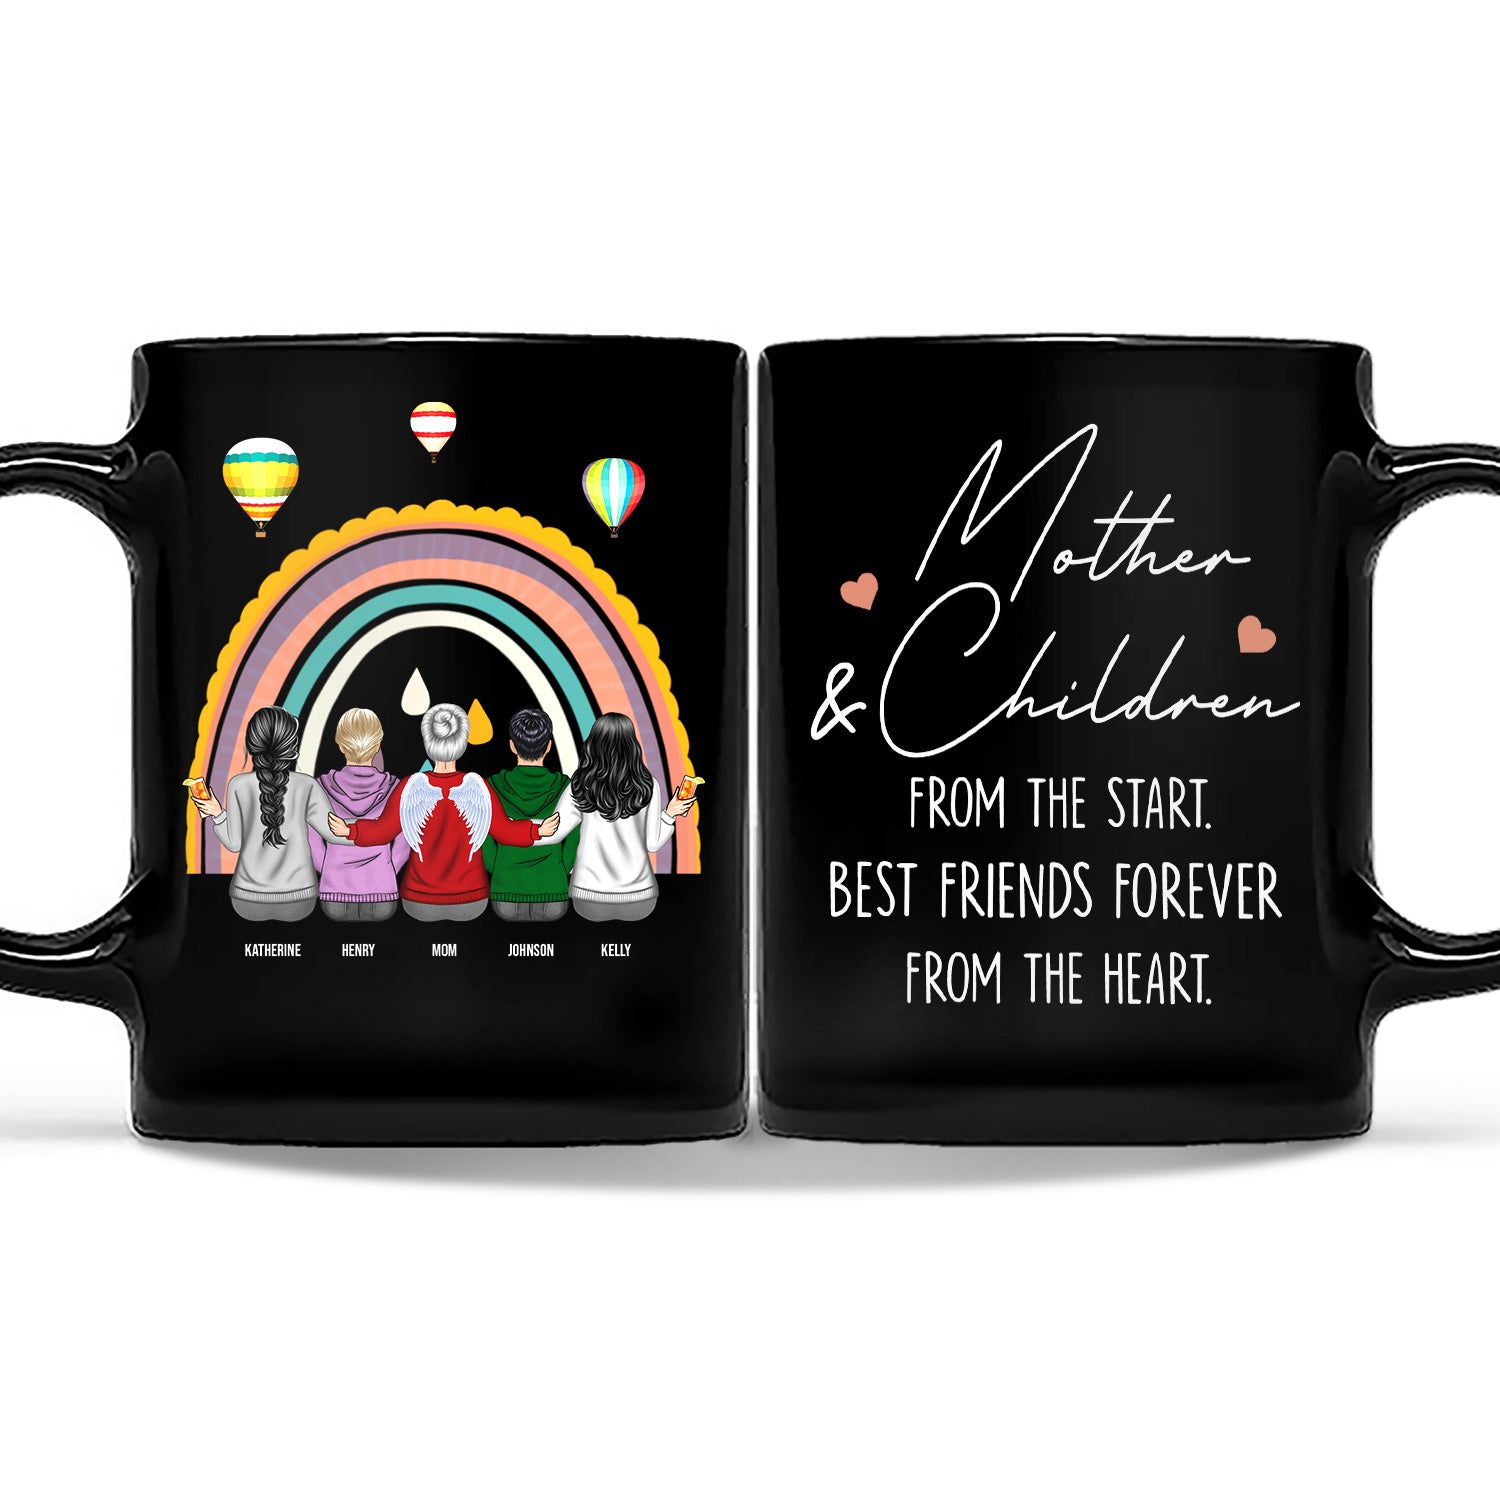 Forever Linked Together - Gift For Mom & Daughter - Personalized Custom Black Mug